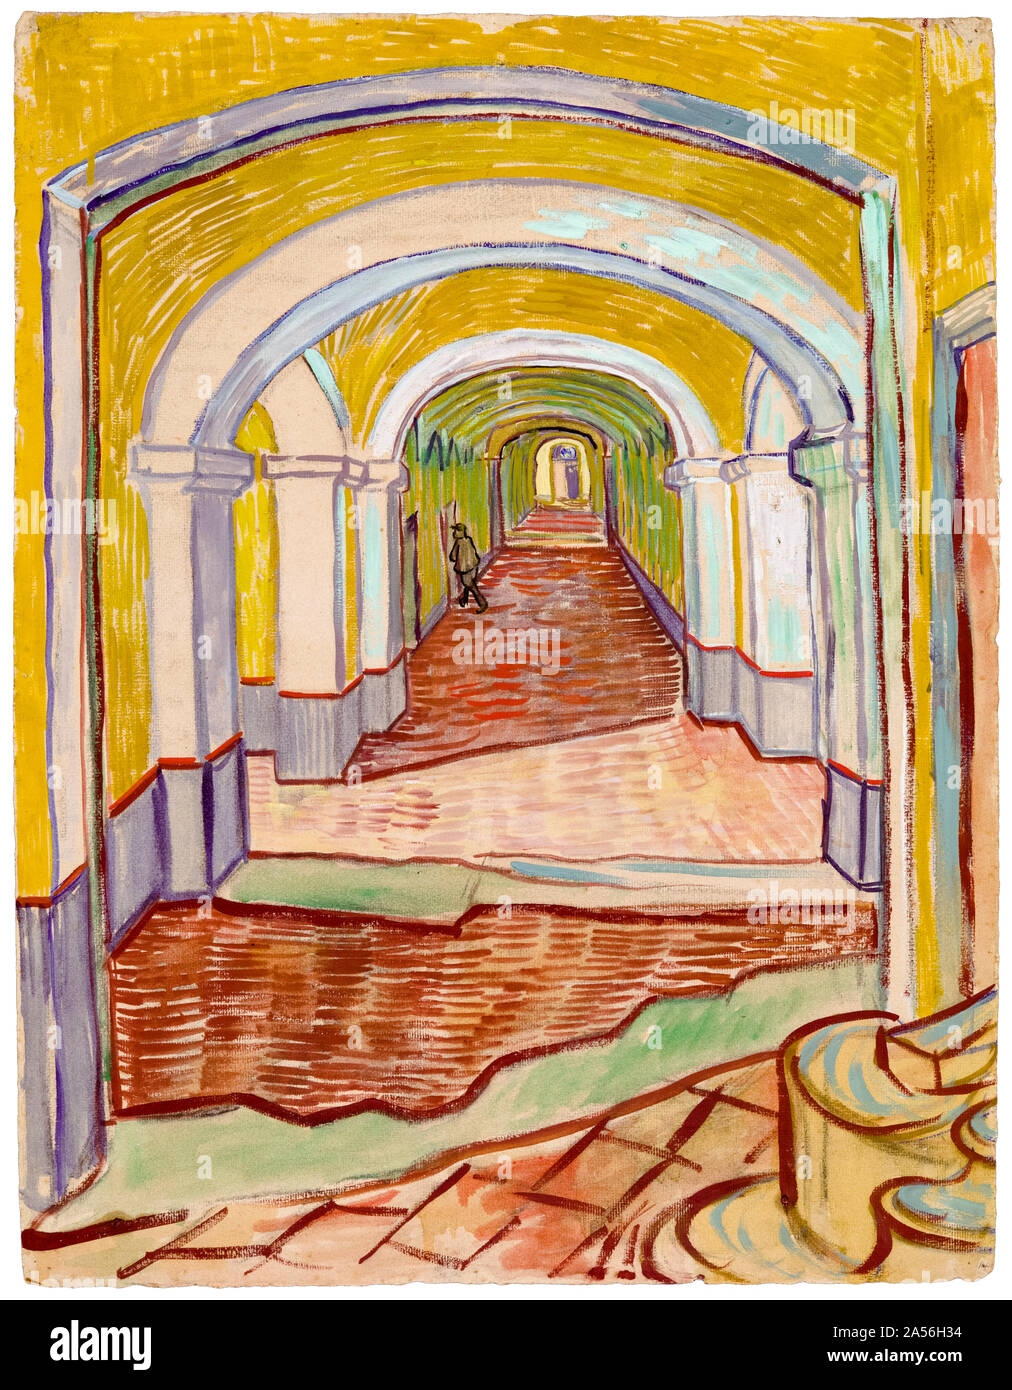 Vincent van Gogh, Corridor in the Asylum, drawing, 1889 Stock Photo